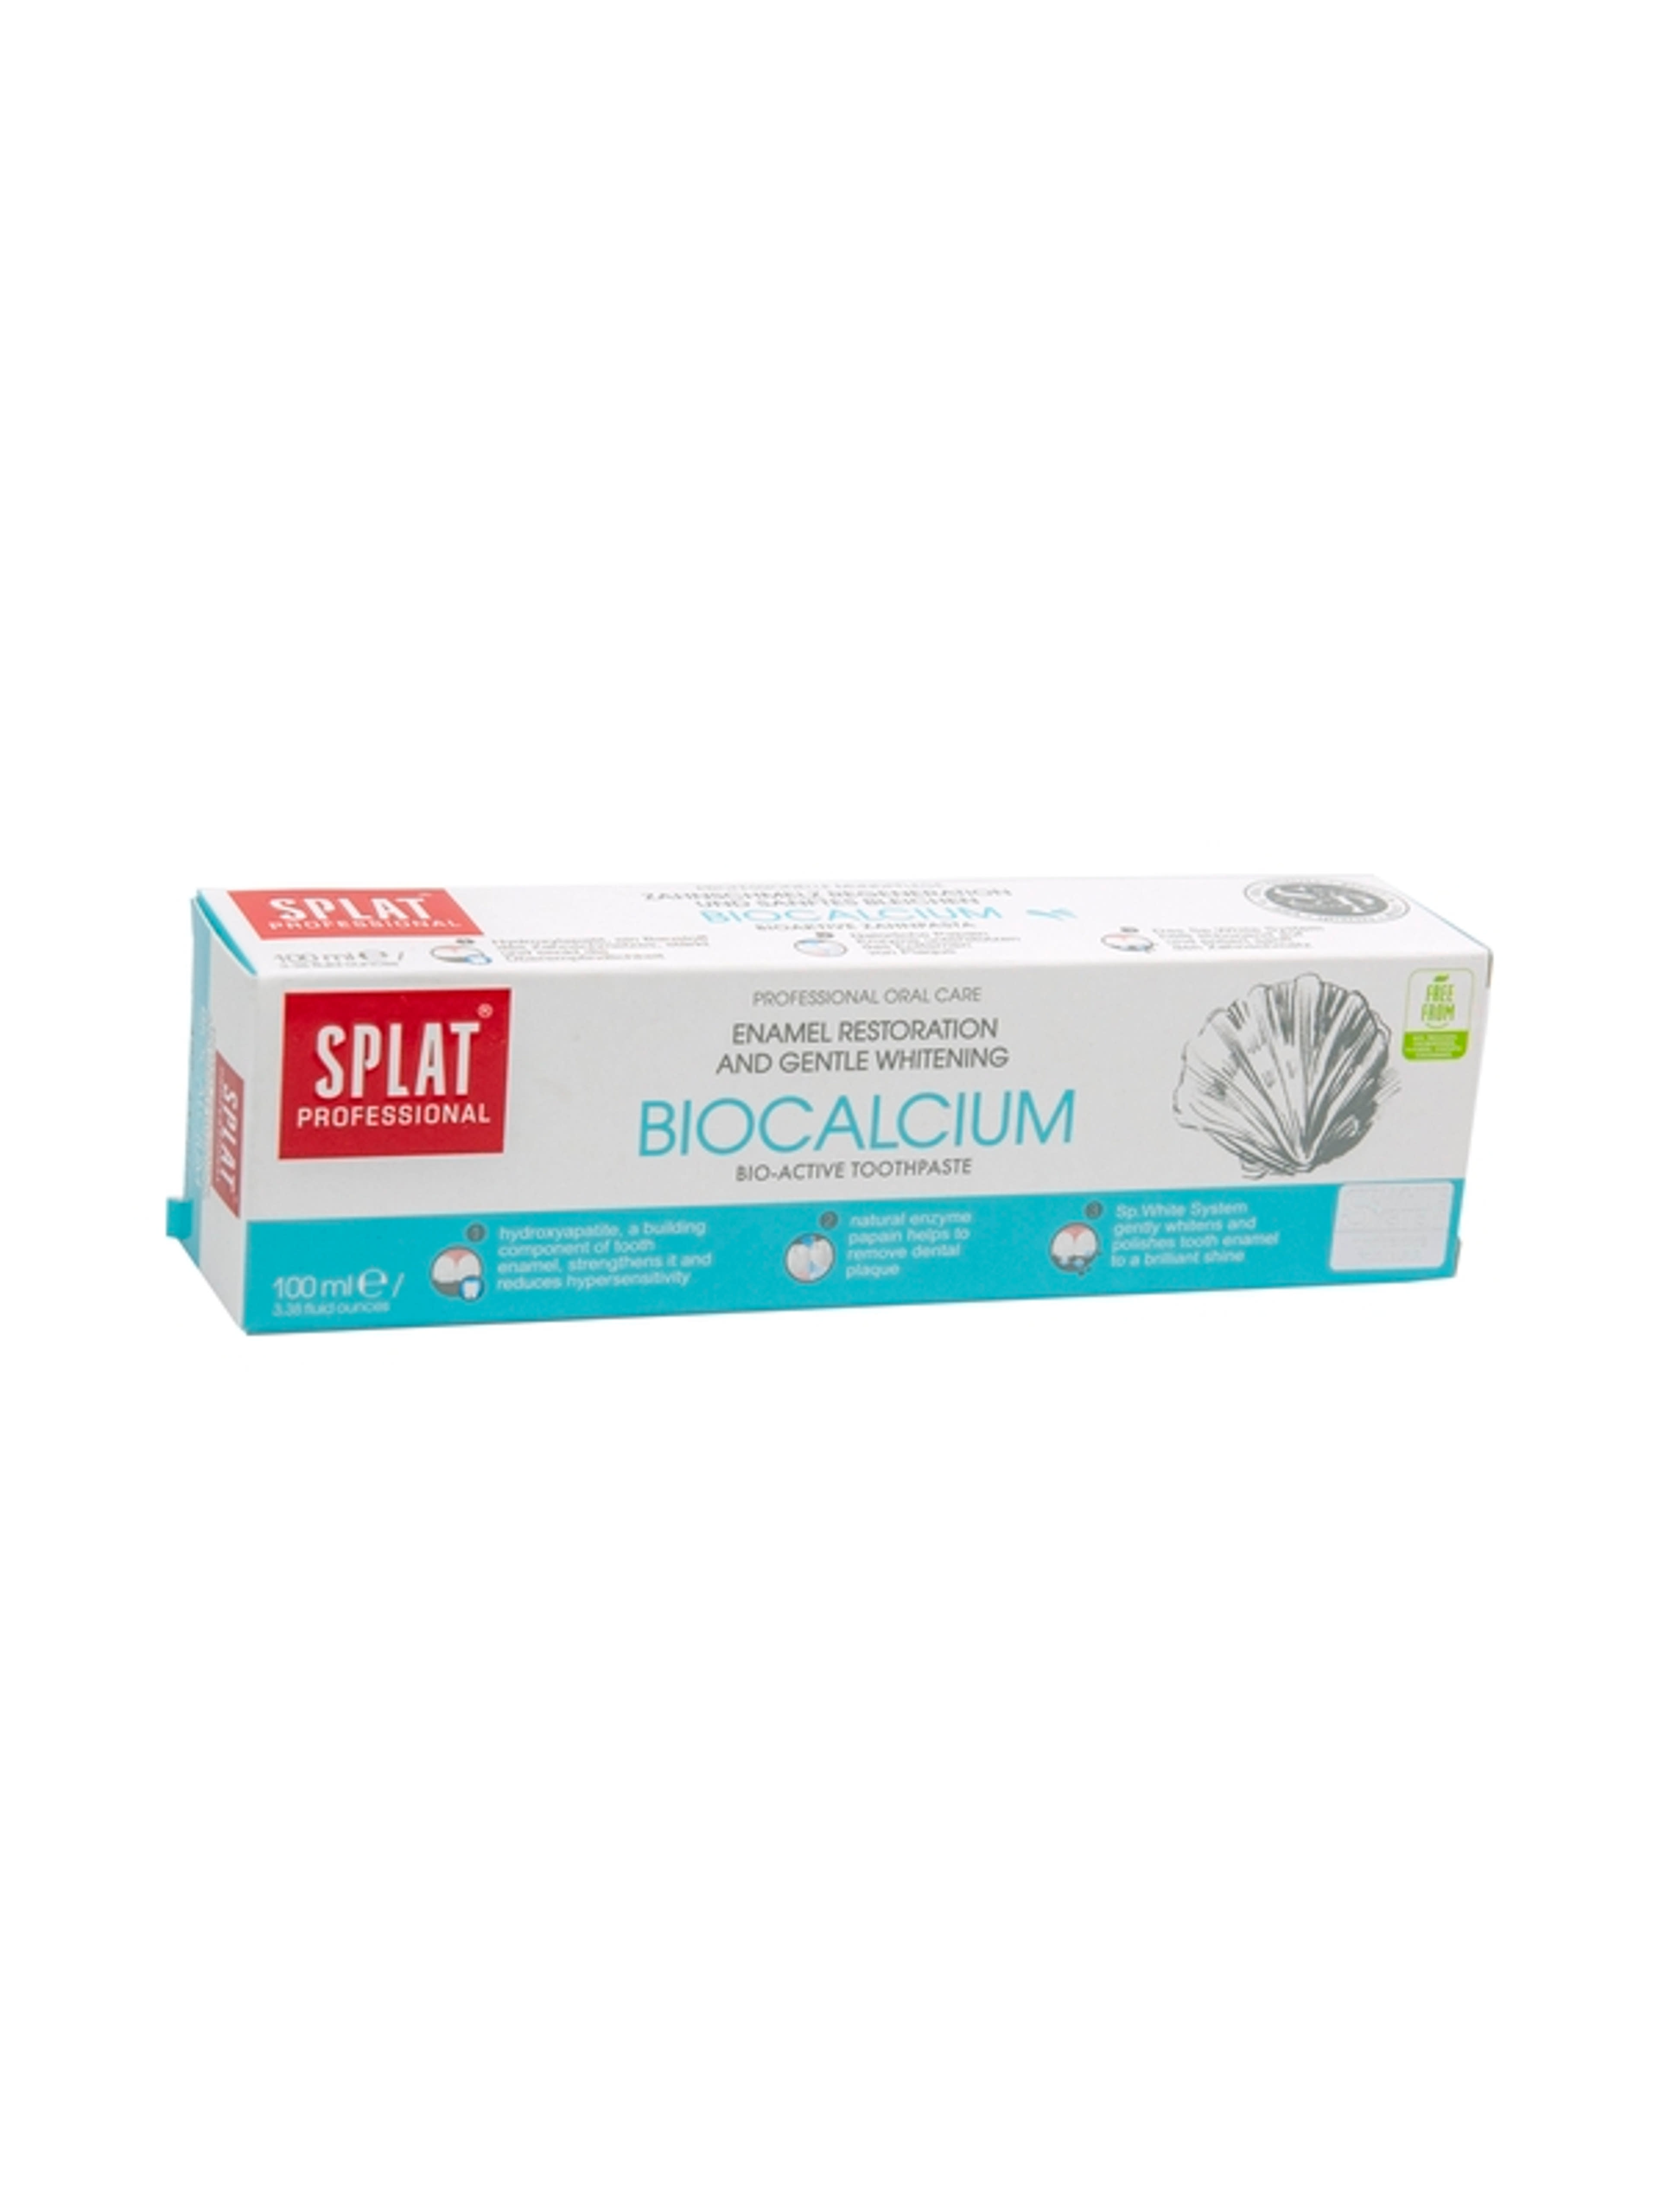 Splat Biocalciom fogkrém - 100 ml-1